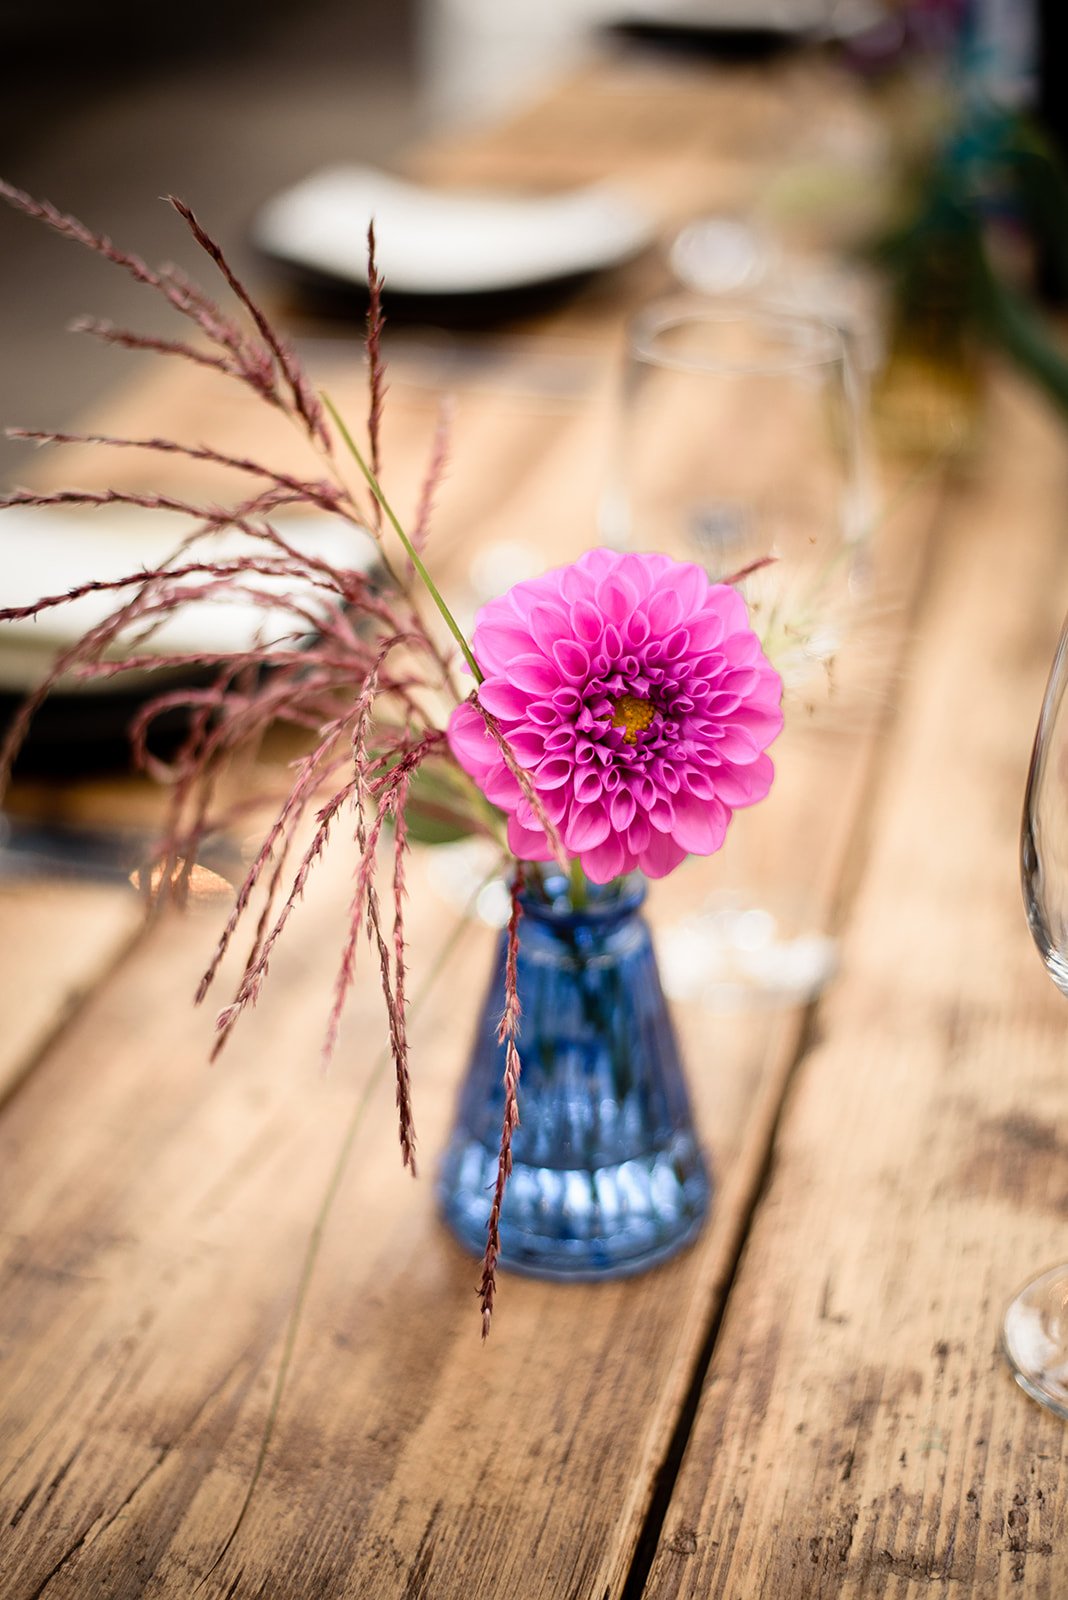 Sheffield-wedding-flowers-wedding-venue-decoration-table-flowersjpg.jpg